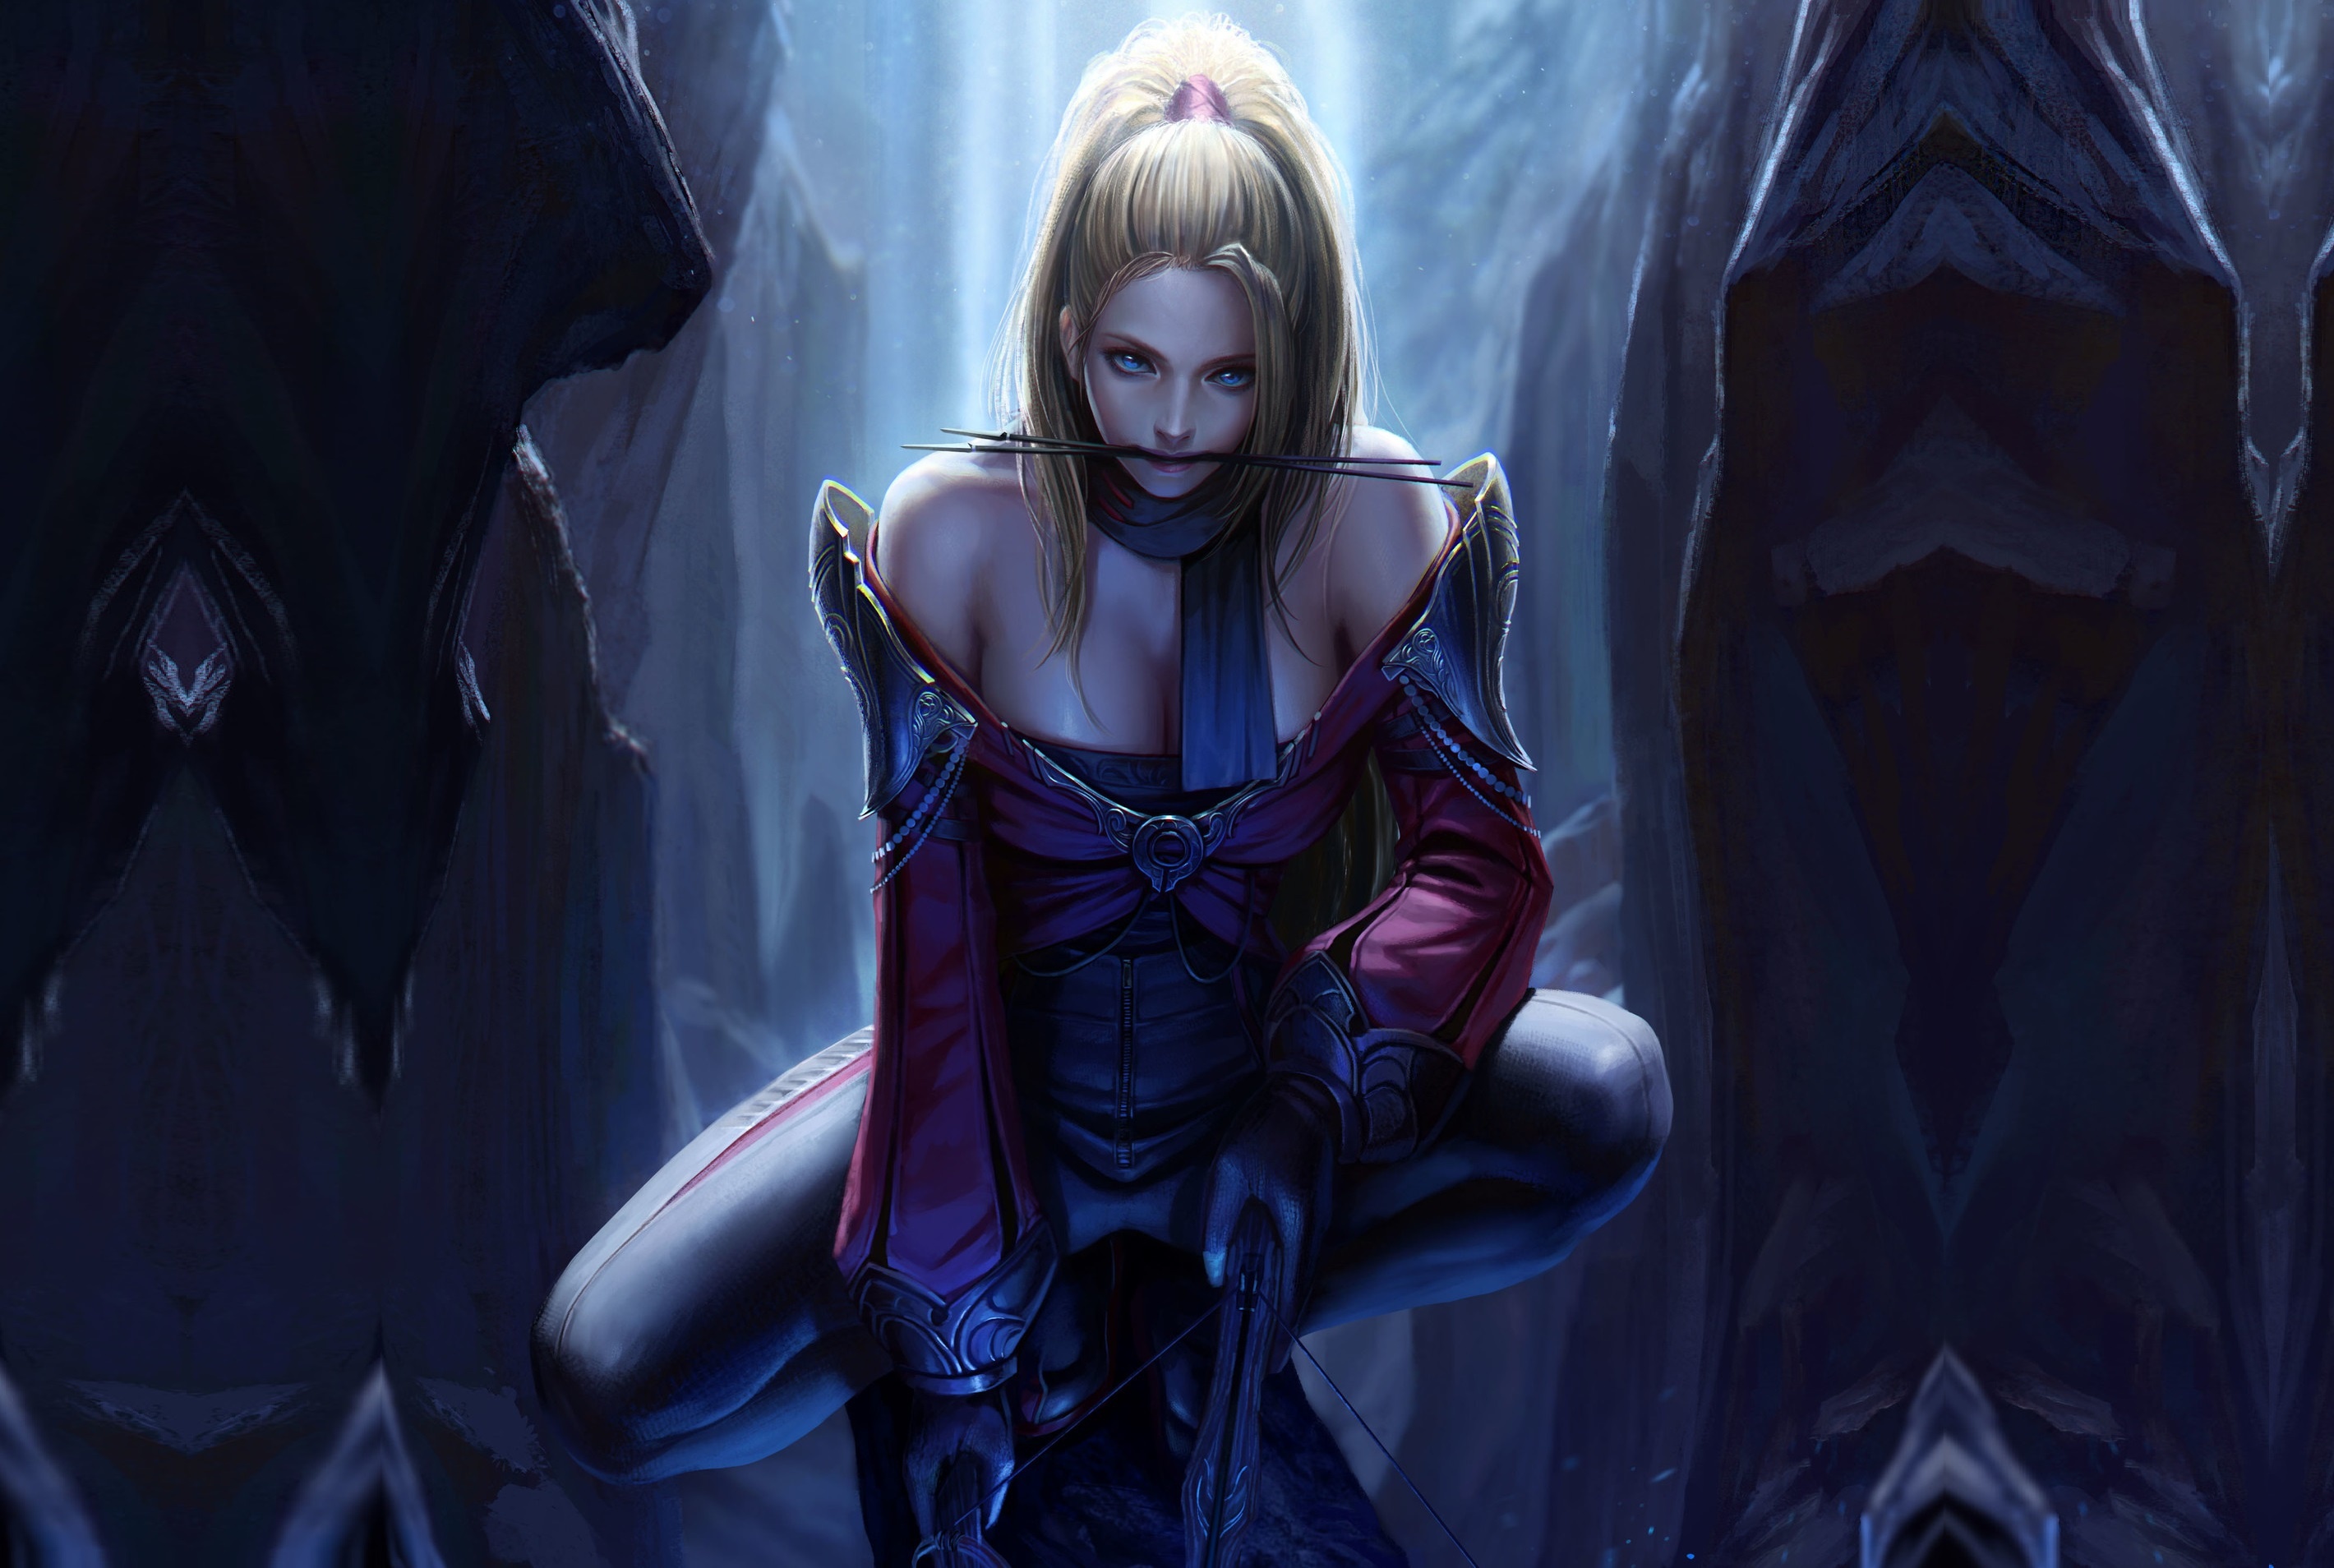 Image: Girl, warrior, cave, fantasy, assassin, fantasy